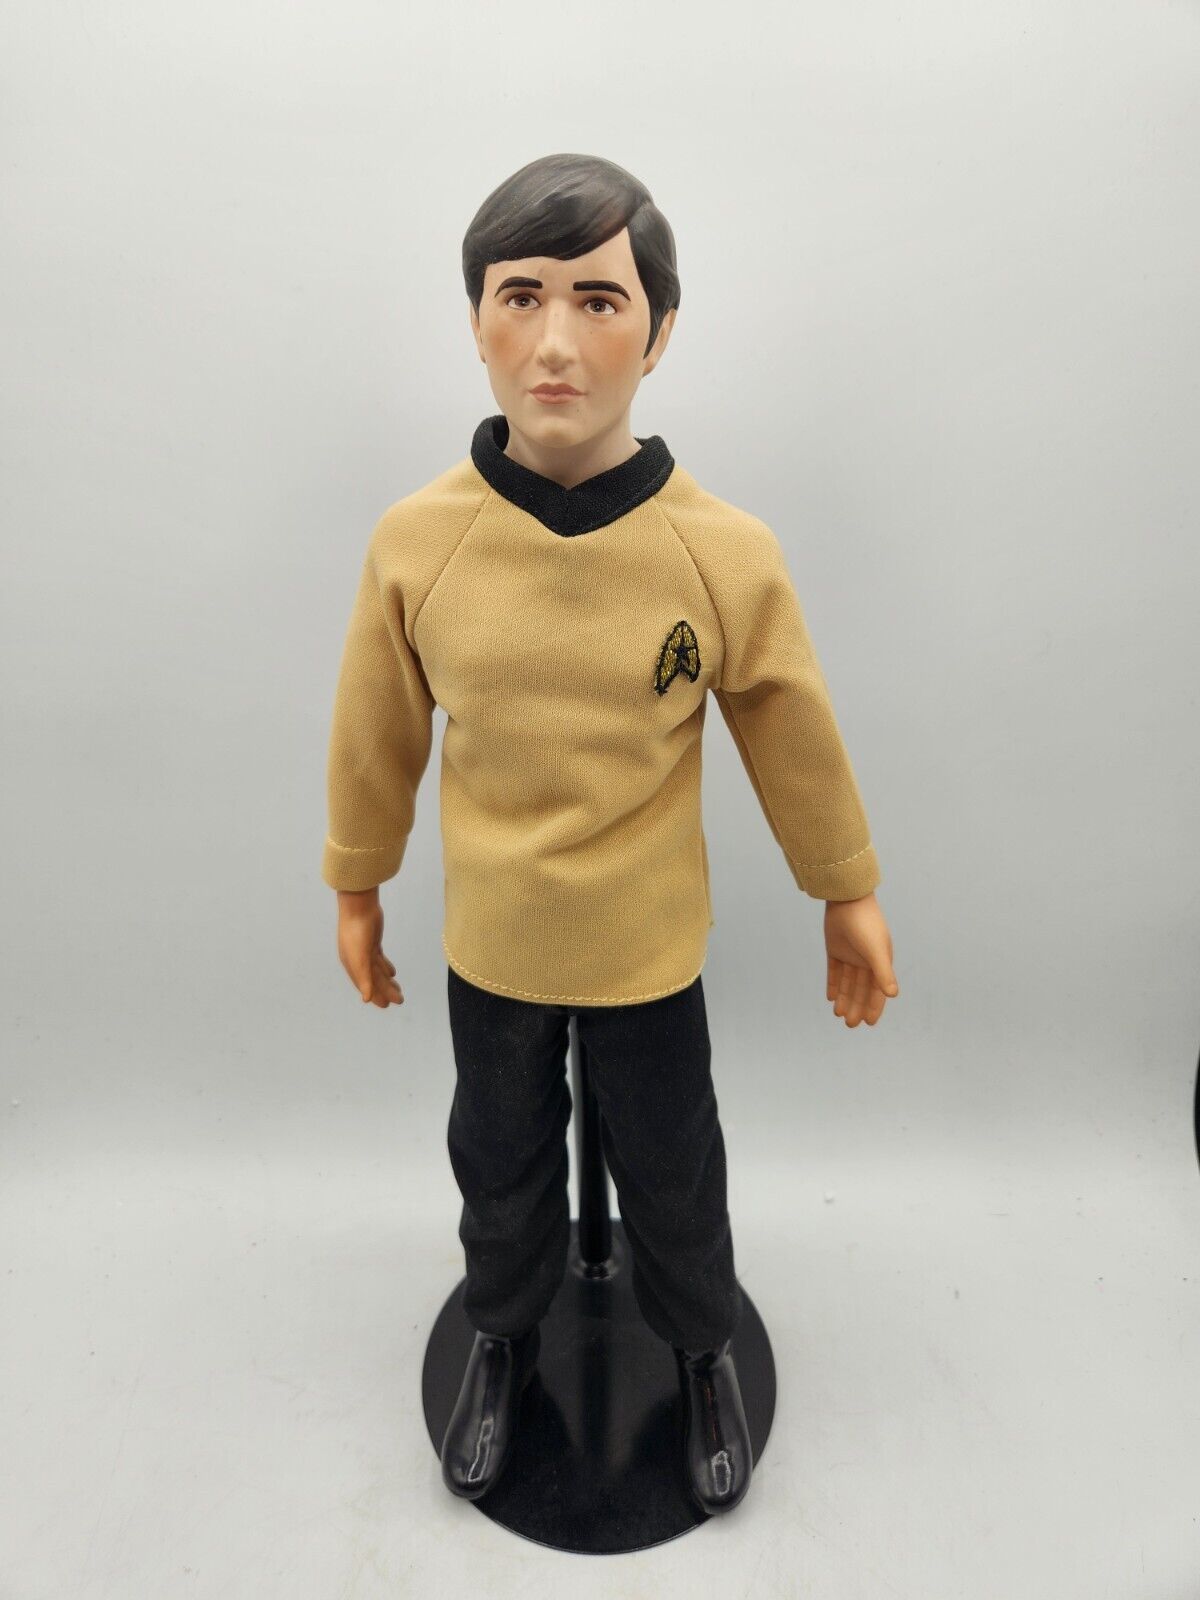 Ernst Hamilton Collection 1988 Star Trek 14" Porcelain Doll Ensign Pavel Checkov - $49.45